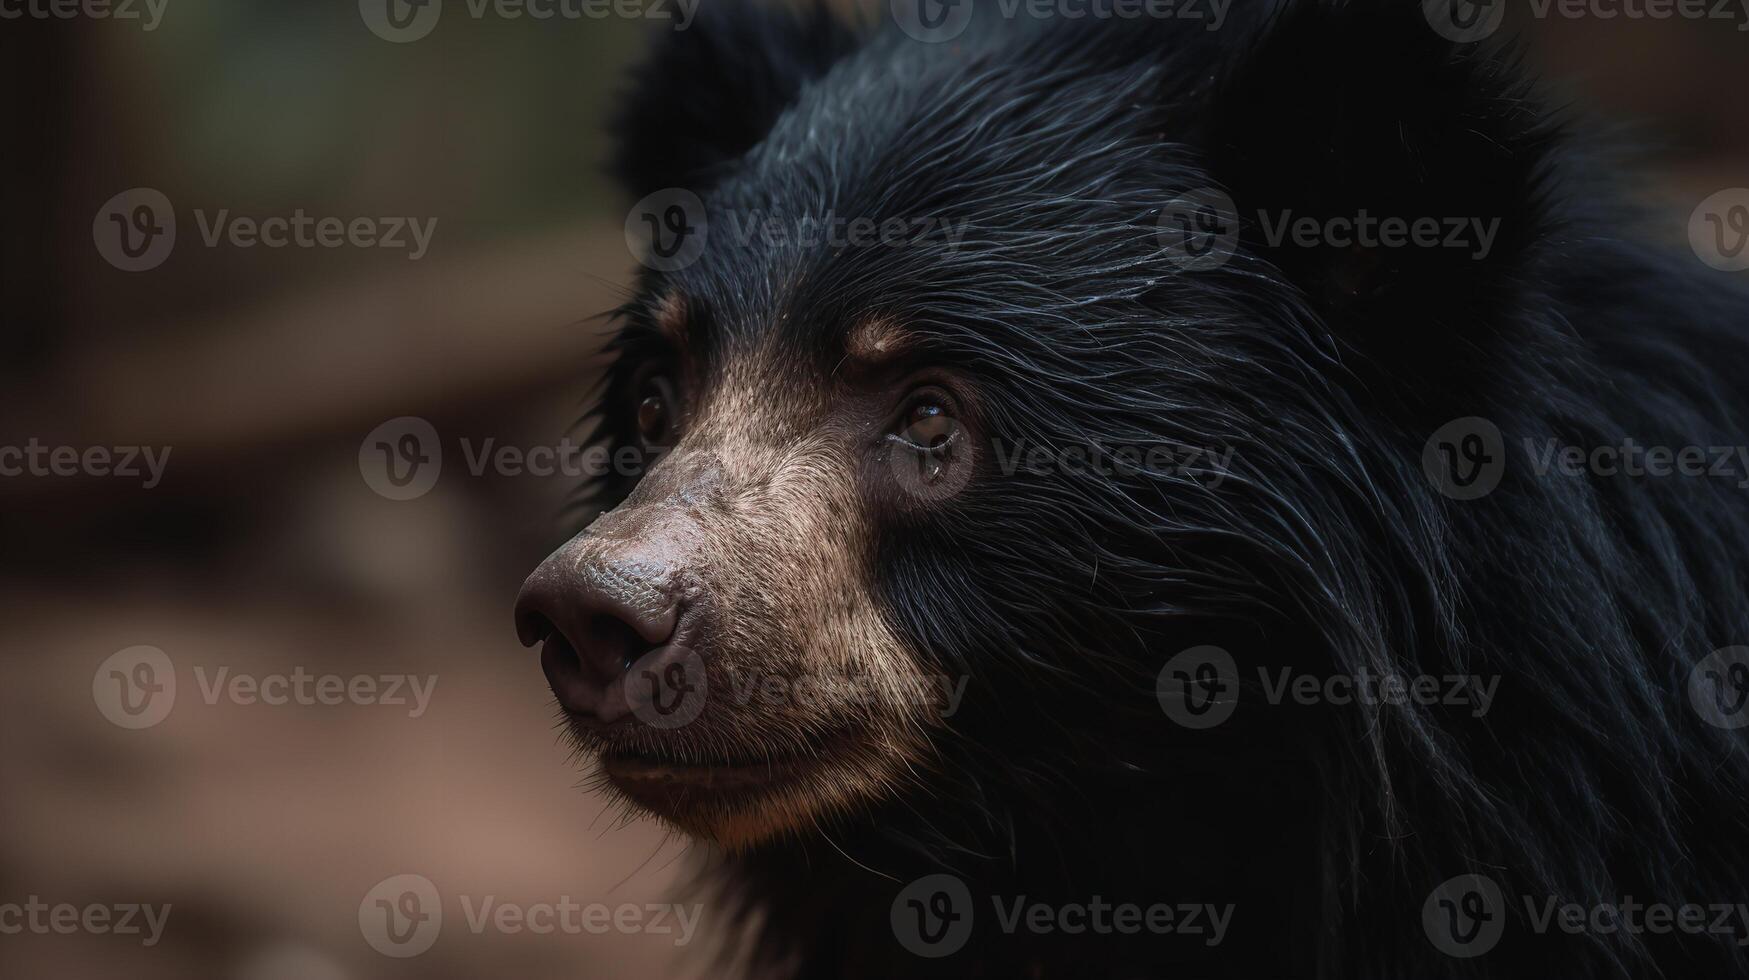 Revealing the Spirit of the Sloth Bear photo